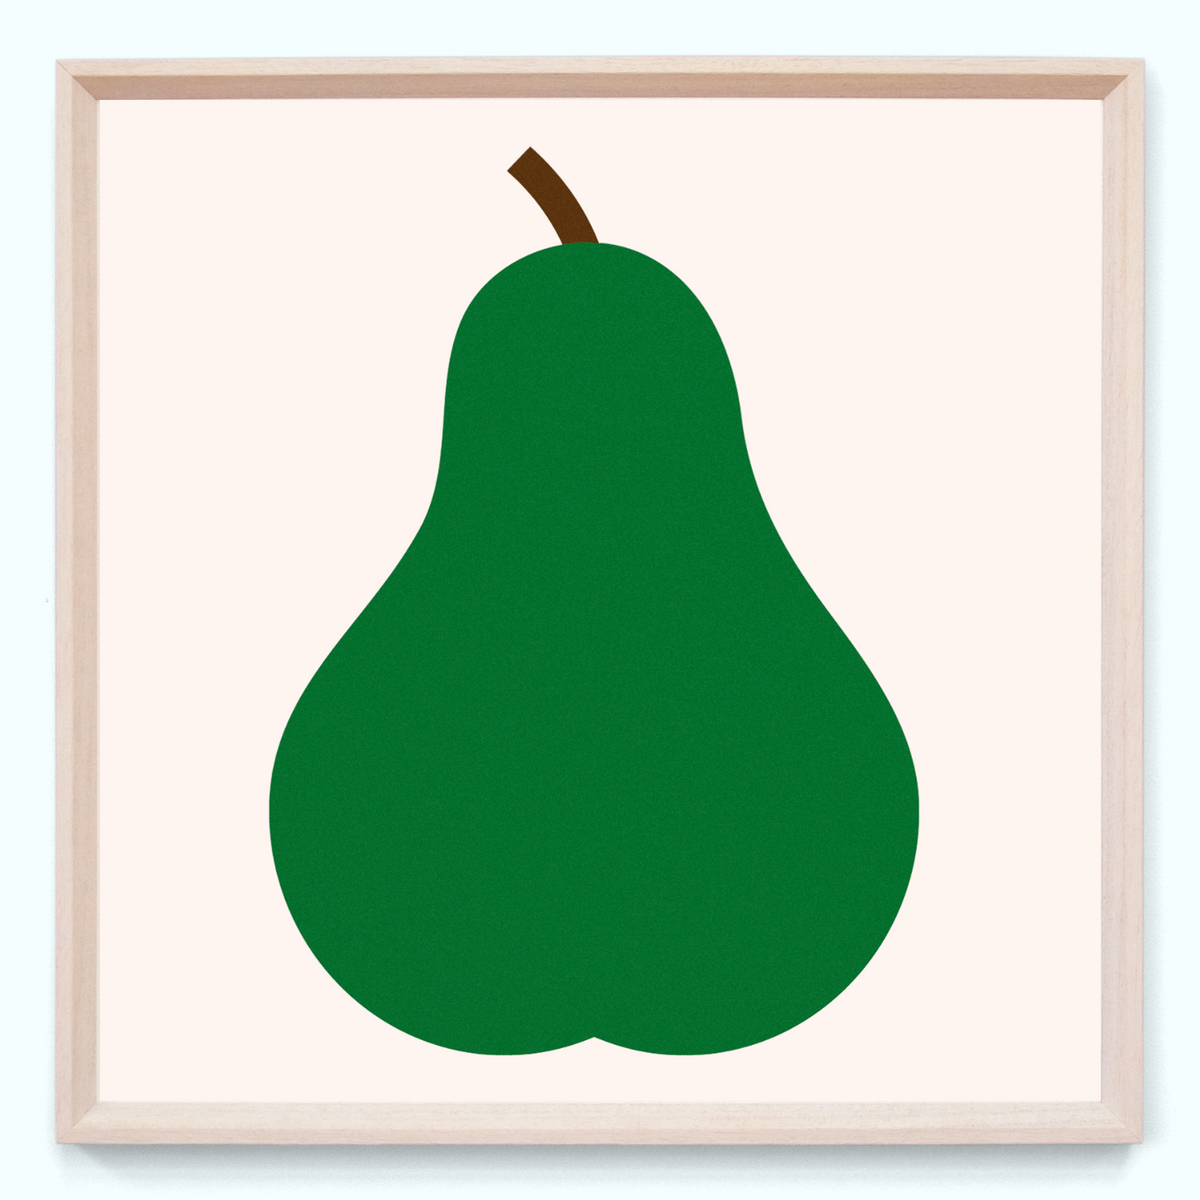 Green Pear Art Print